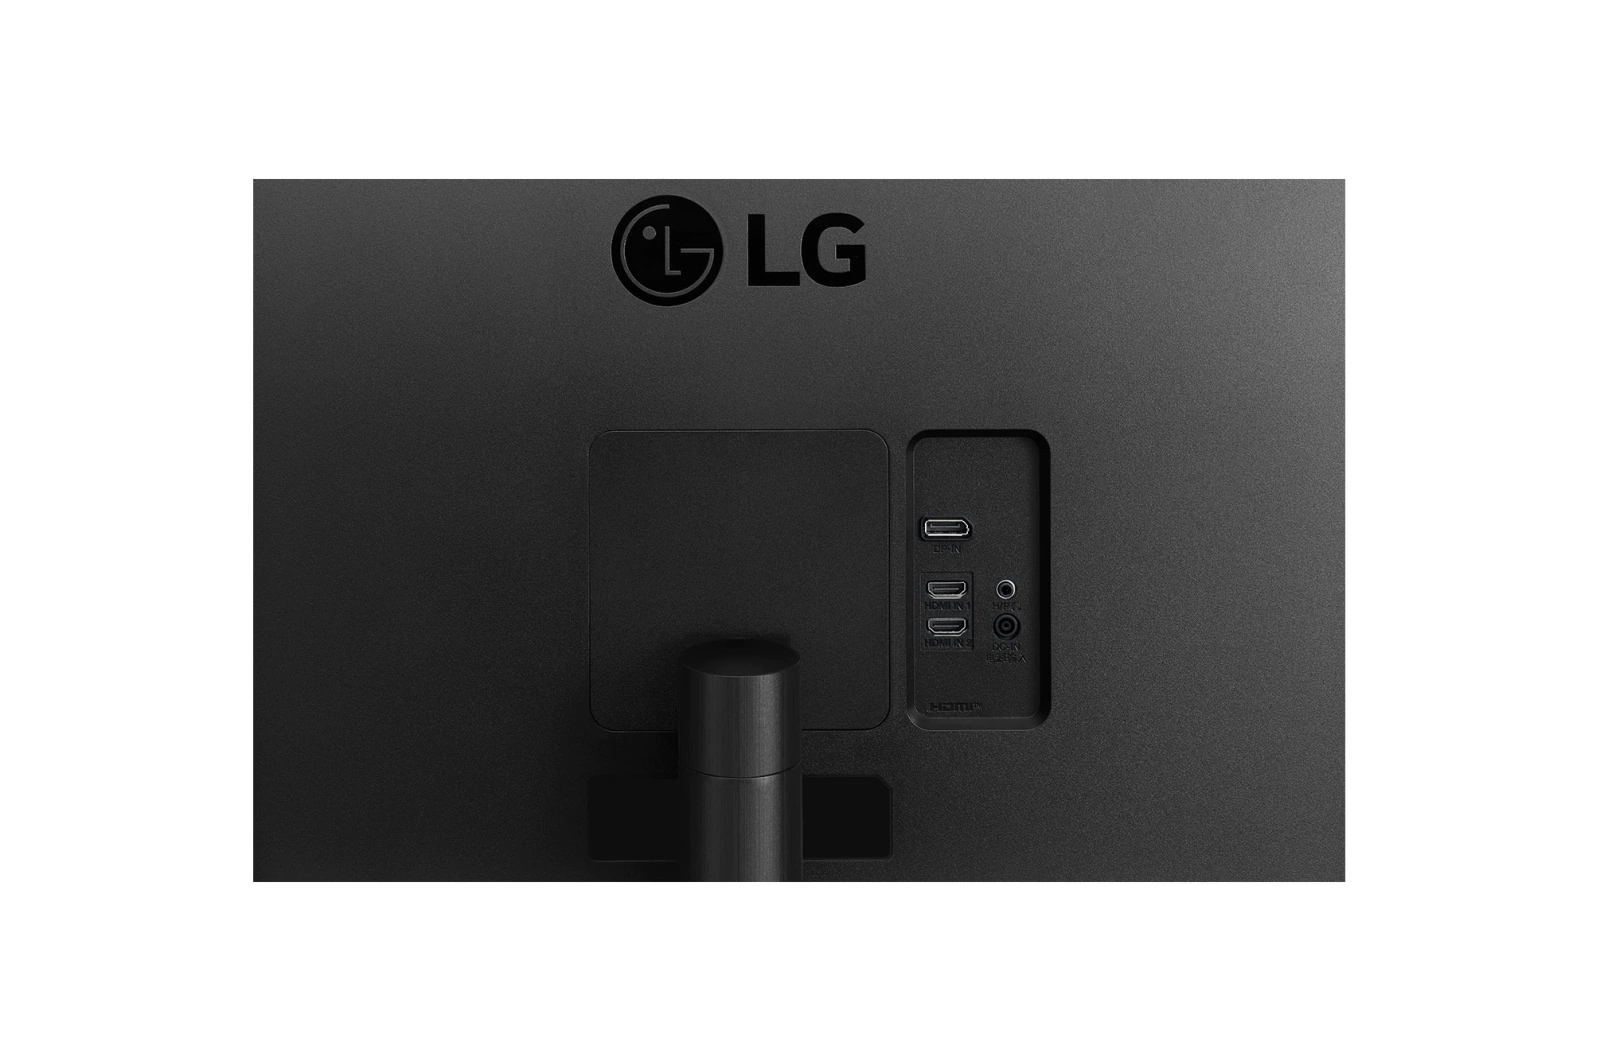 Монитор LG IPS LED, 2560x1440, 5ms, 178°/178°, 350cd/m2, 1000:1 (Mega DCR), 2*HDMI, DP, 75Hz, AMD FreeSync, HDR10, Black  32QN600-B 32QN600-B #1